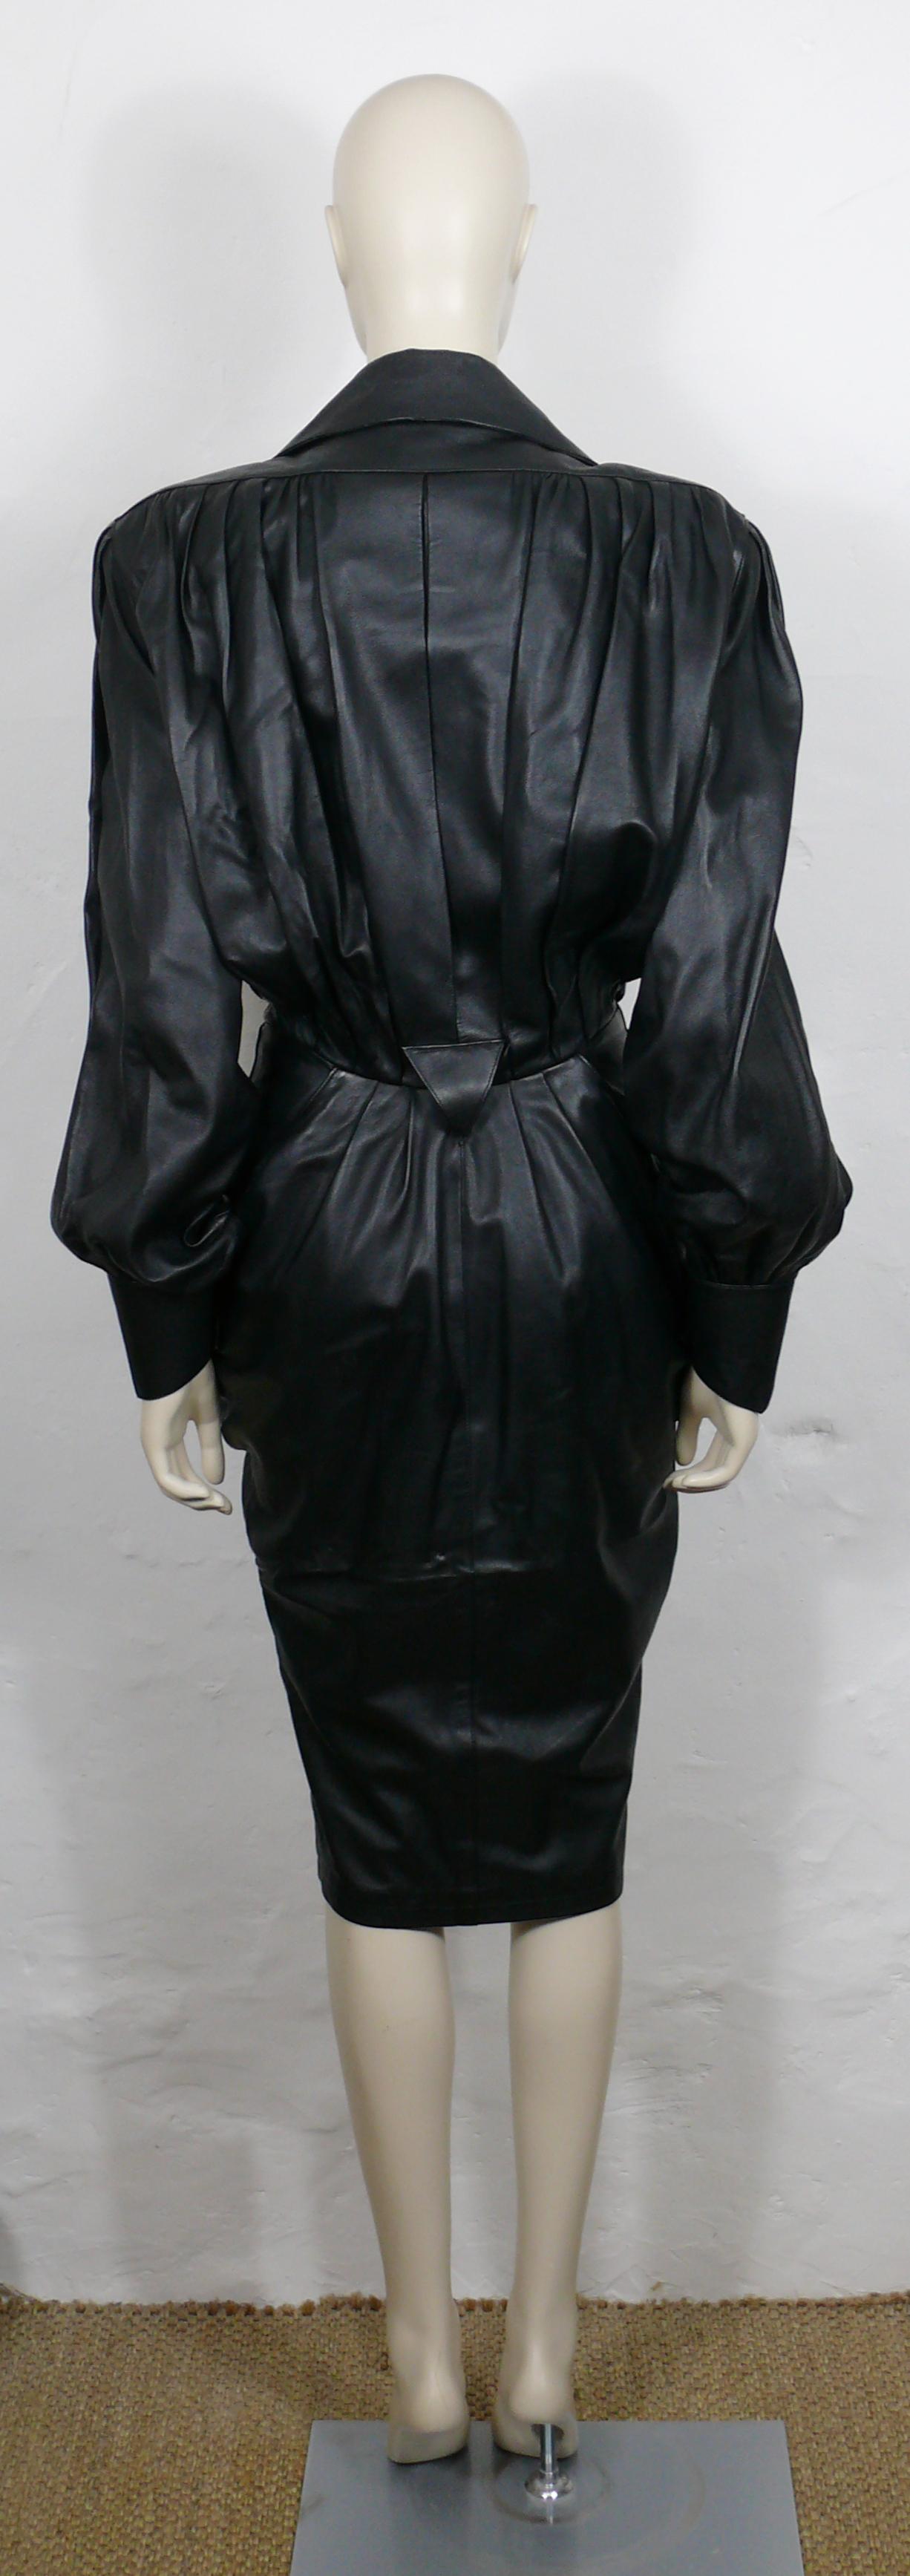 THIERRY MUGLER Vintage Black Leather Dress For Sale 1